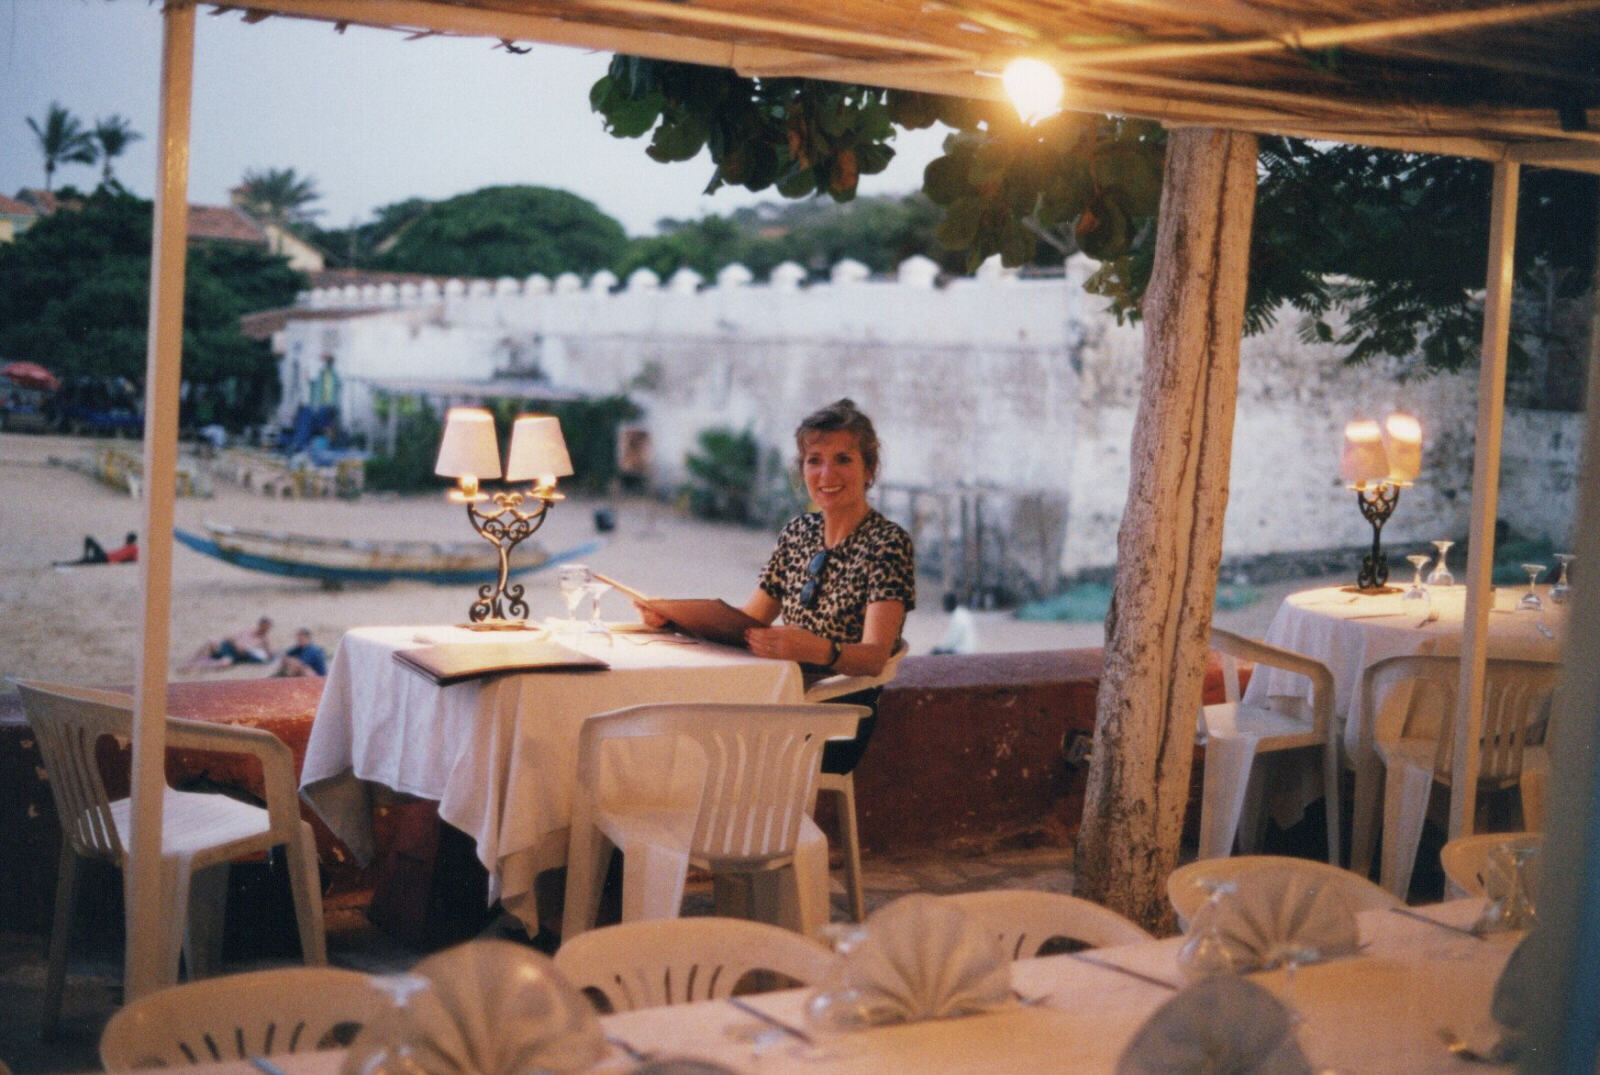 Chevalier_de_Boufflers restaurant on Goree island, Senegal